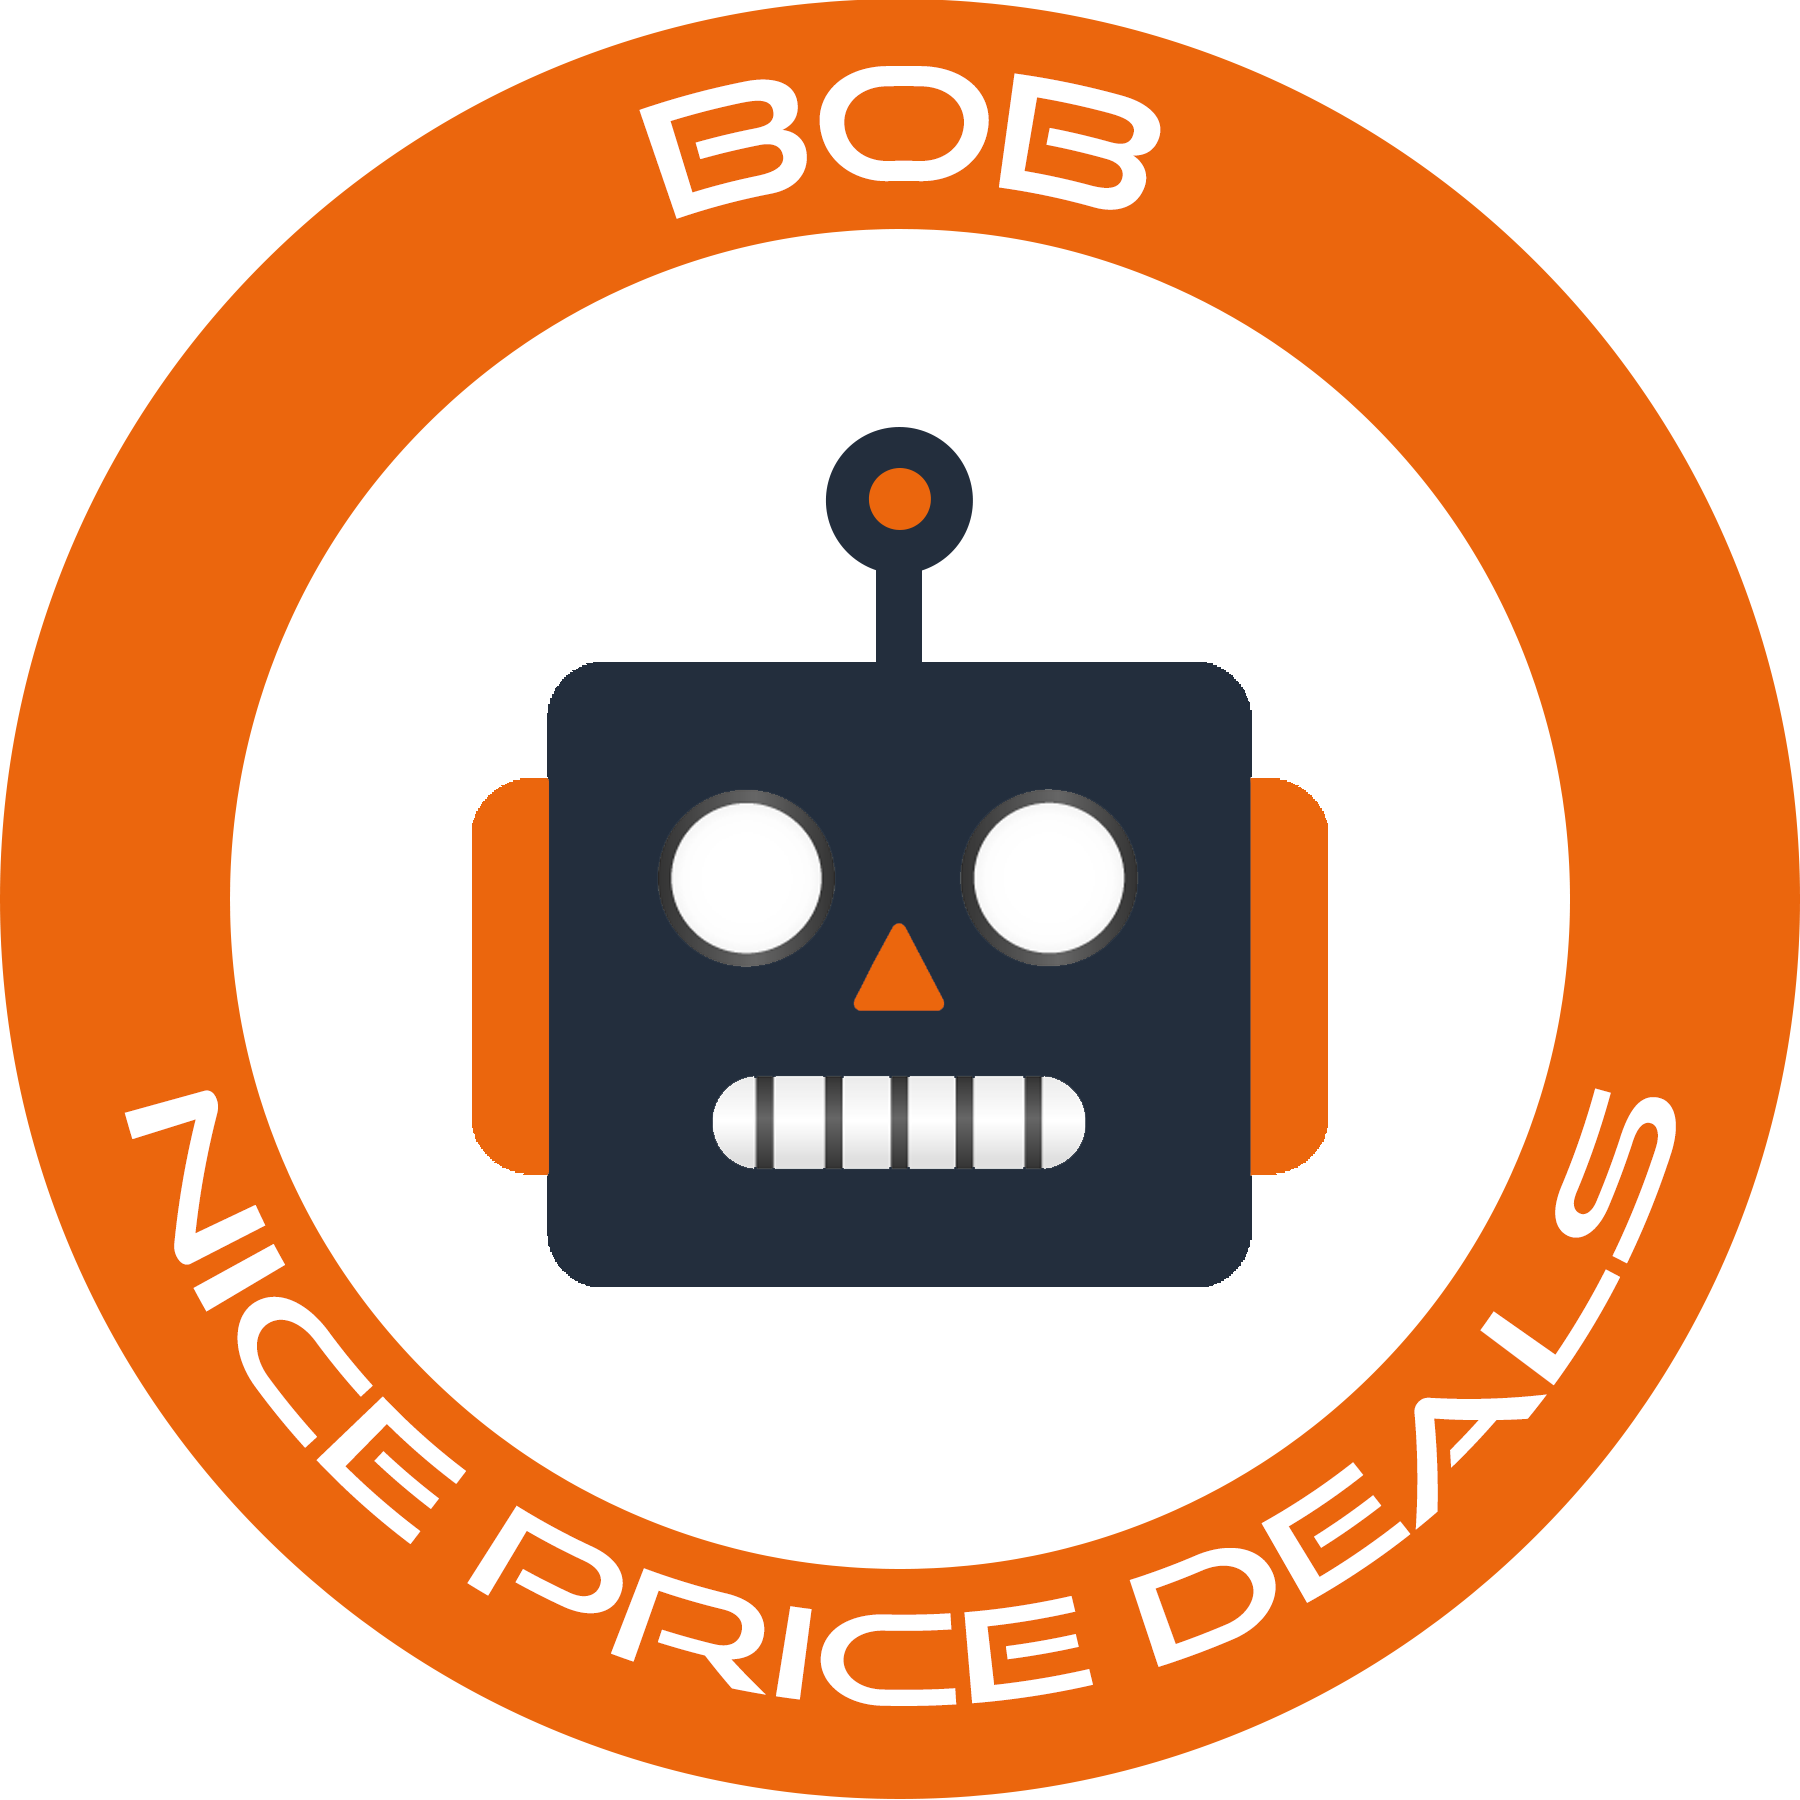 Bob Nice Price Deals